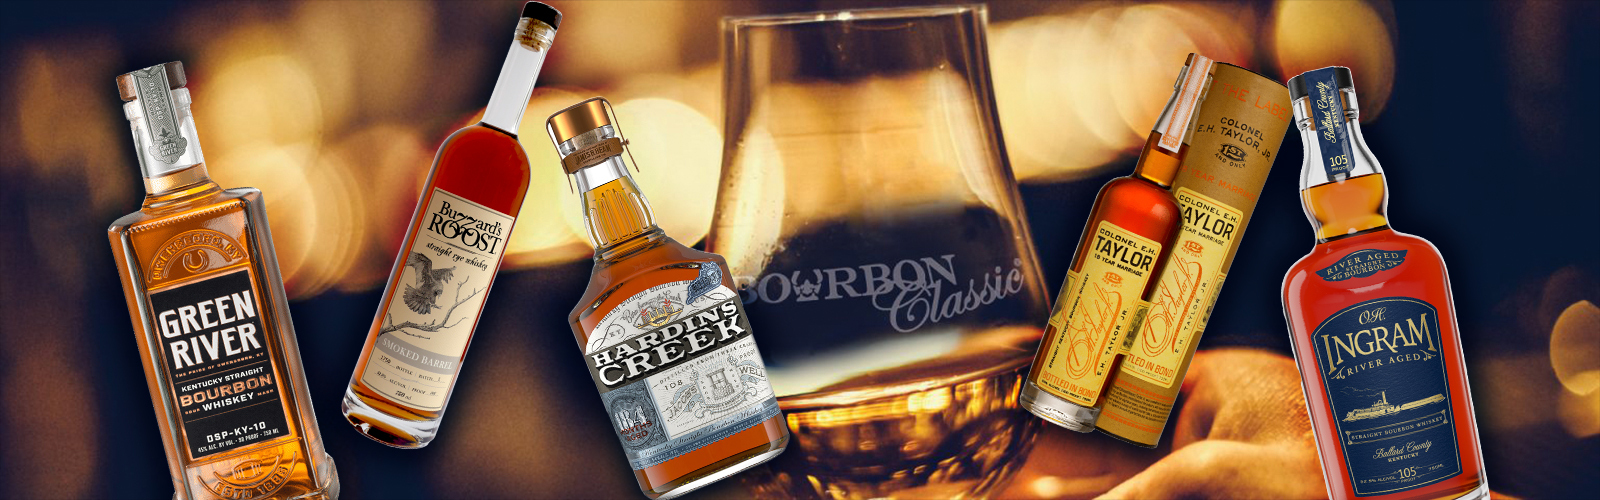 Bourbon Classic Whiskeys